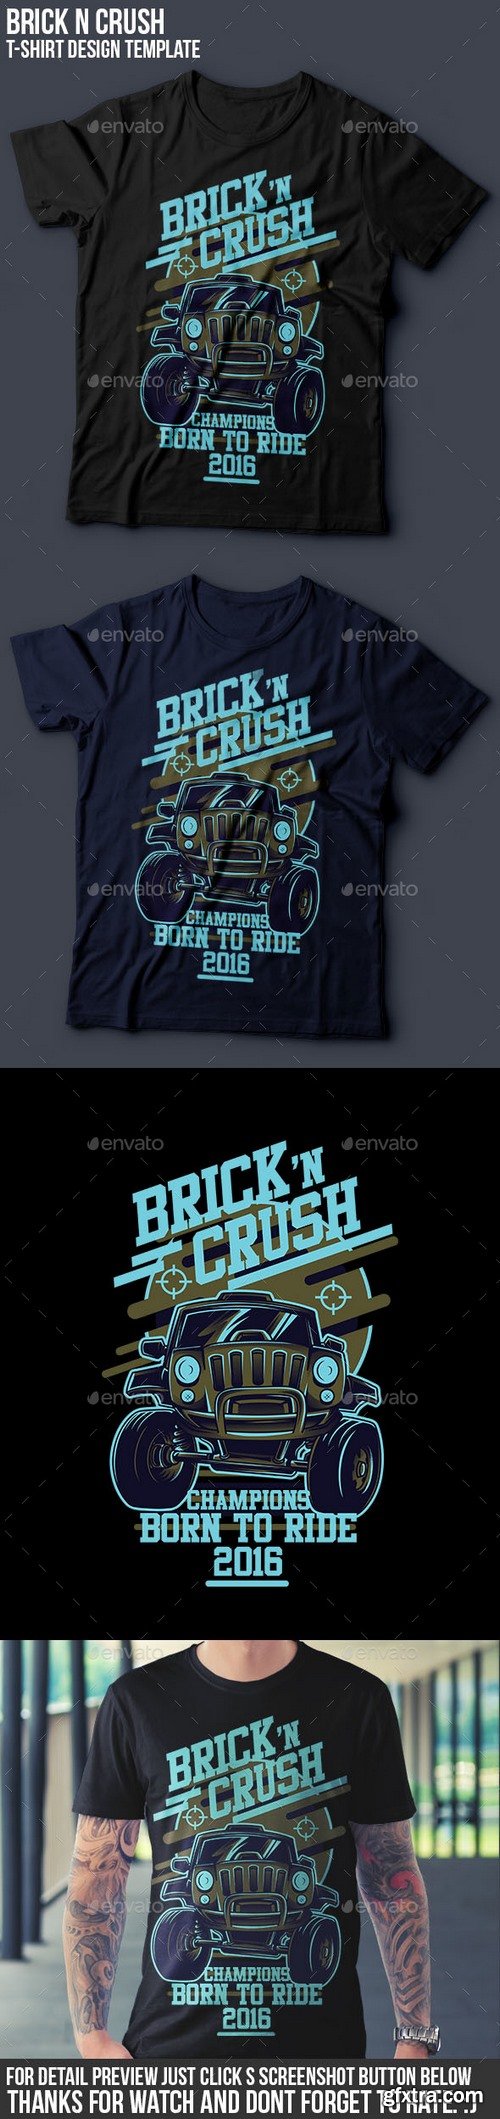 Graphicriver - Brick n Crush T-Shirt Design 14845593